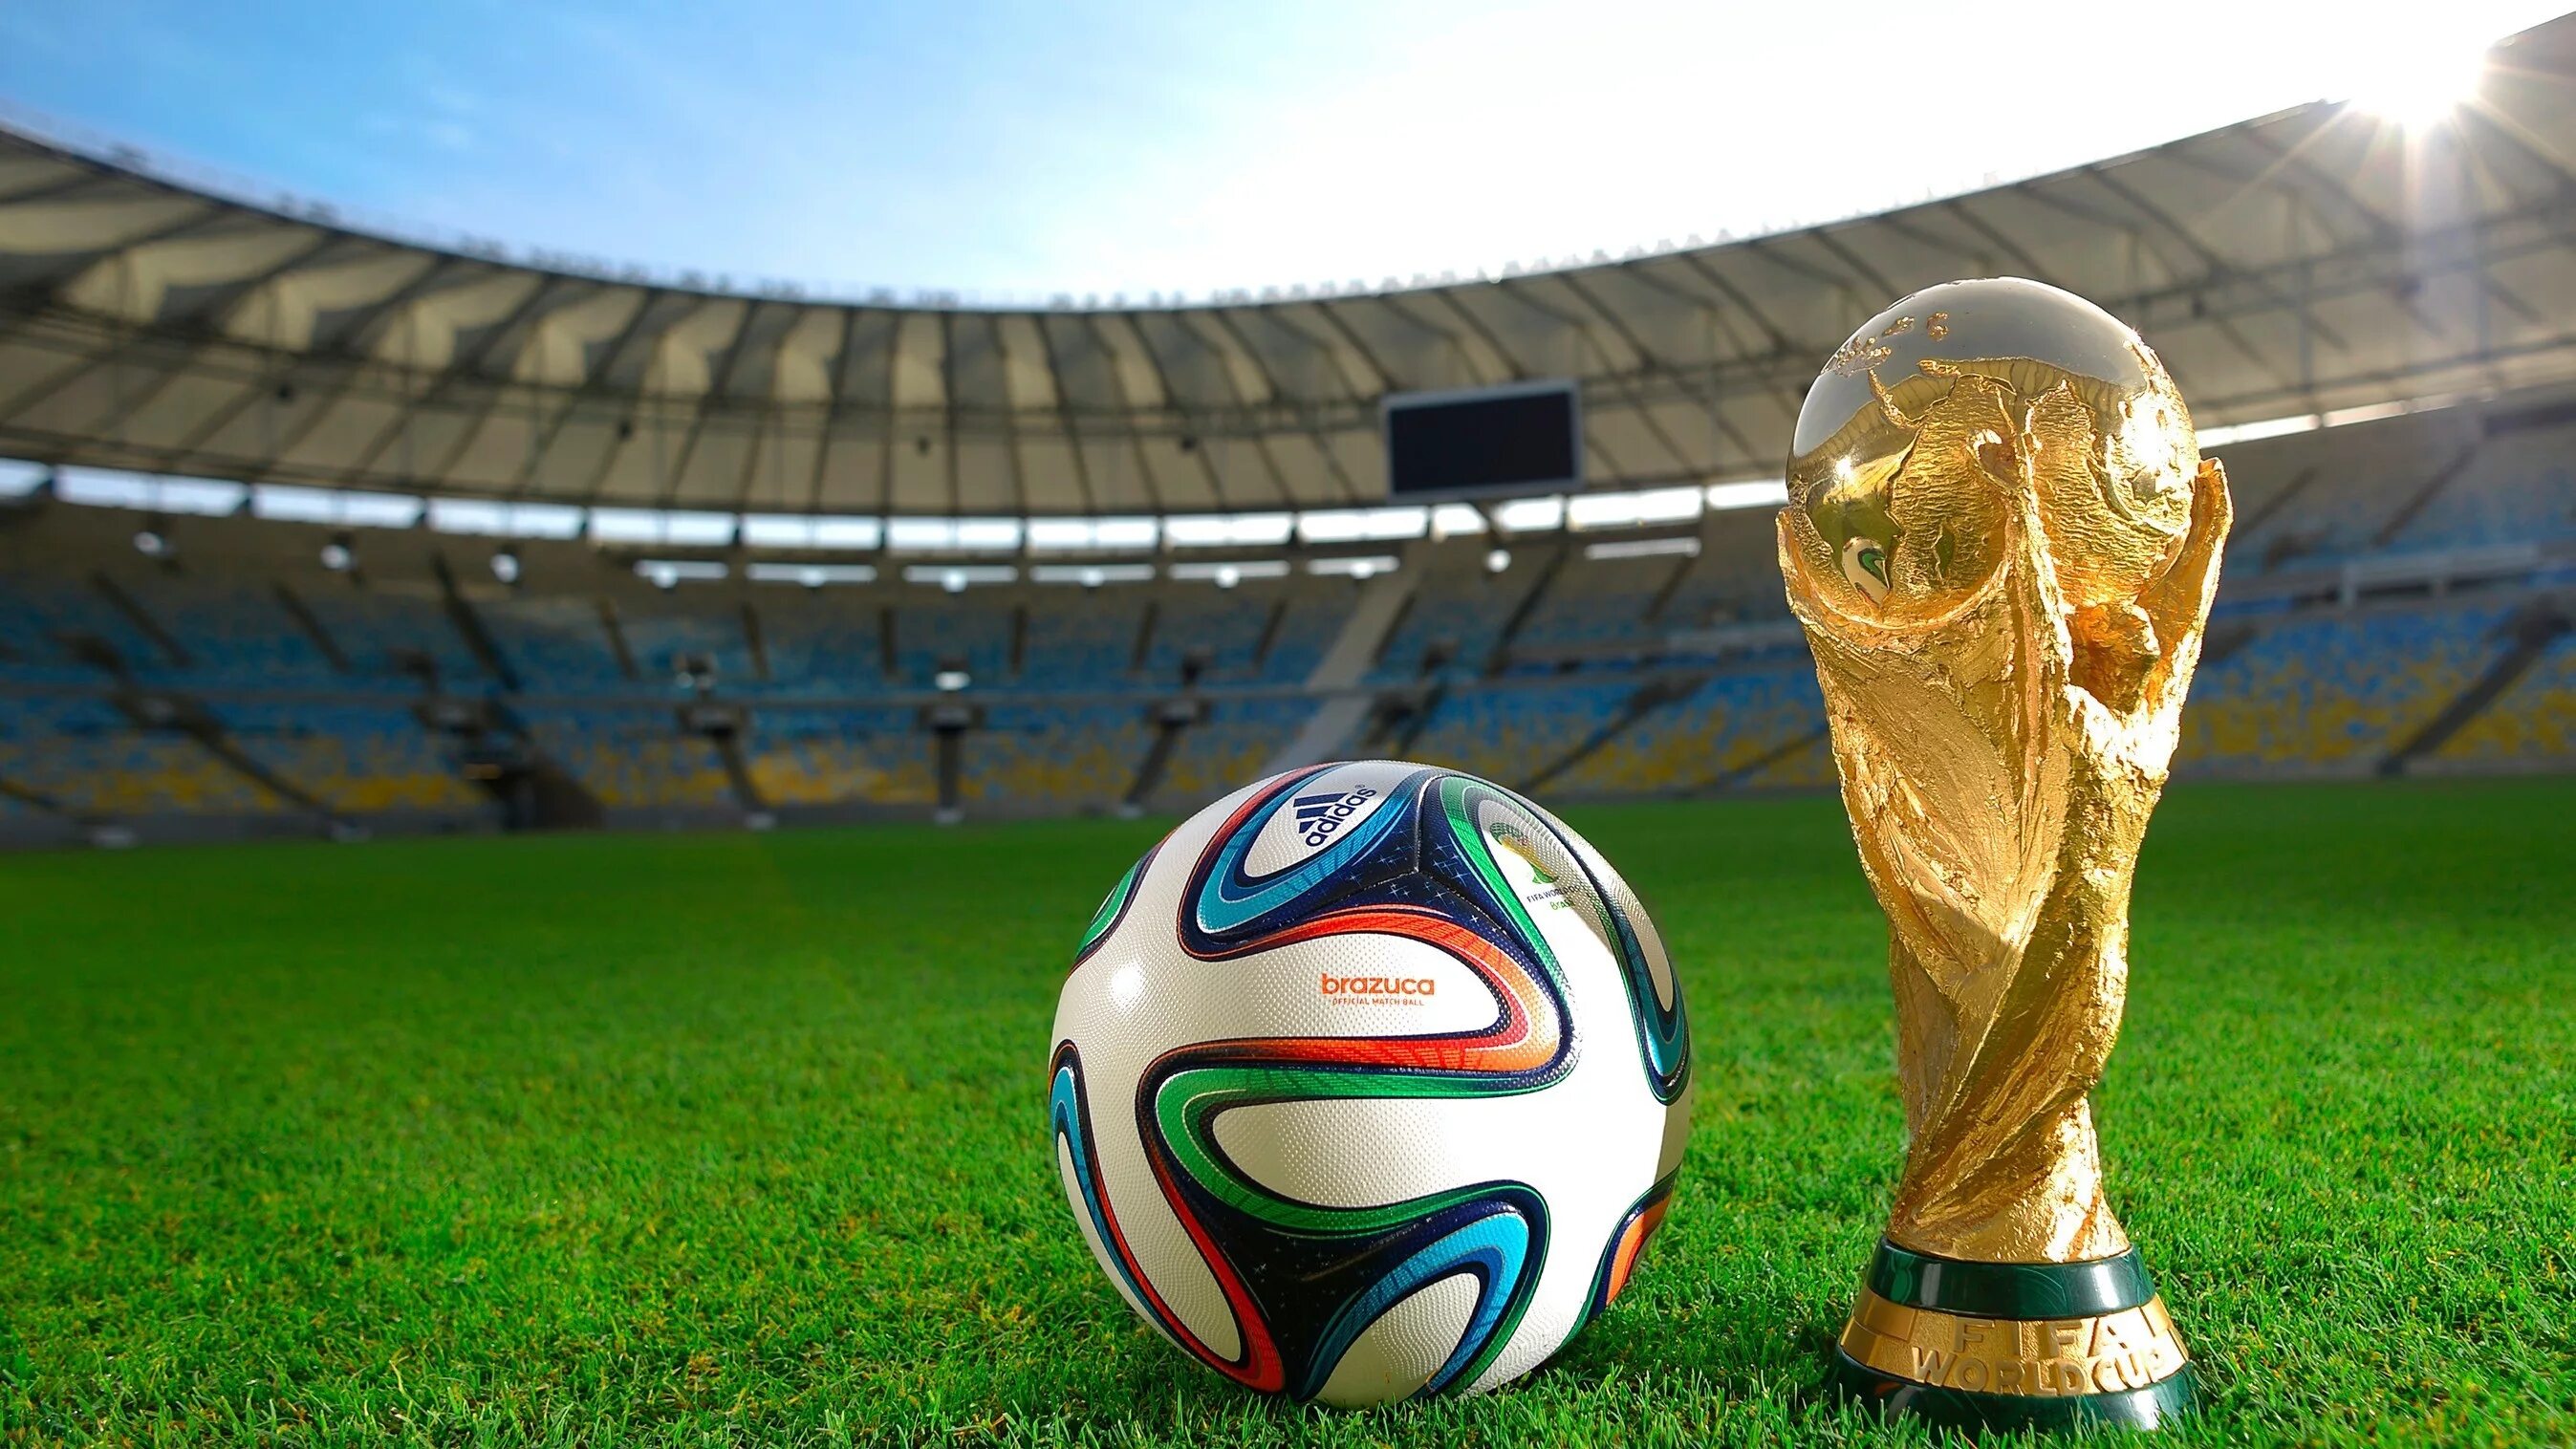 World cup soccer. FIFA World Cup 2022 Кубок. Мяч ЧМ 2026 по футболу. FIFA World Cup Brazil 2014 мяч.